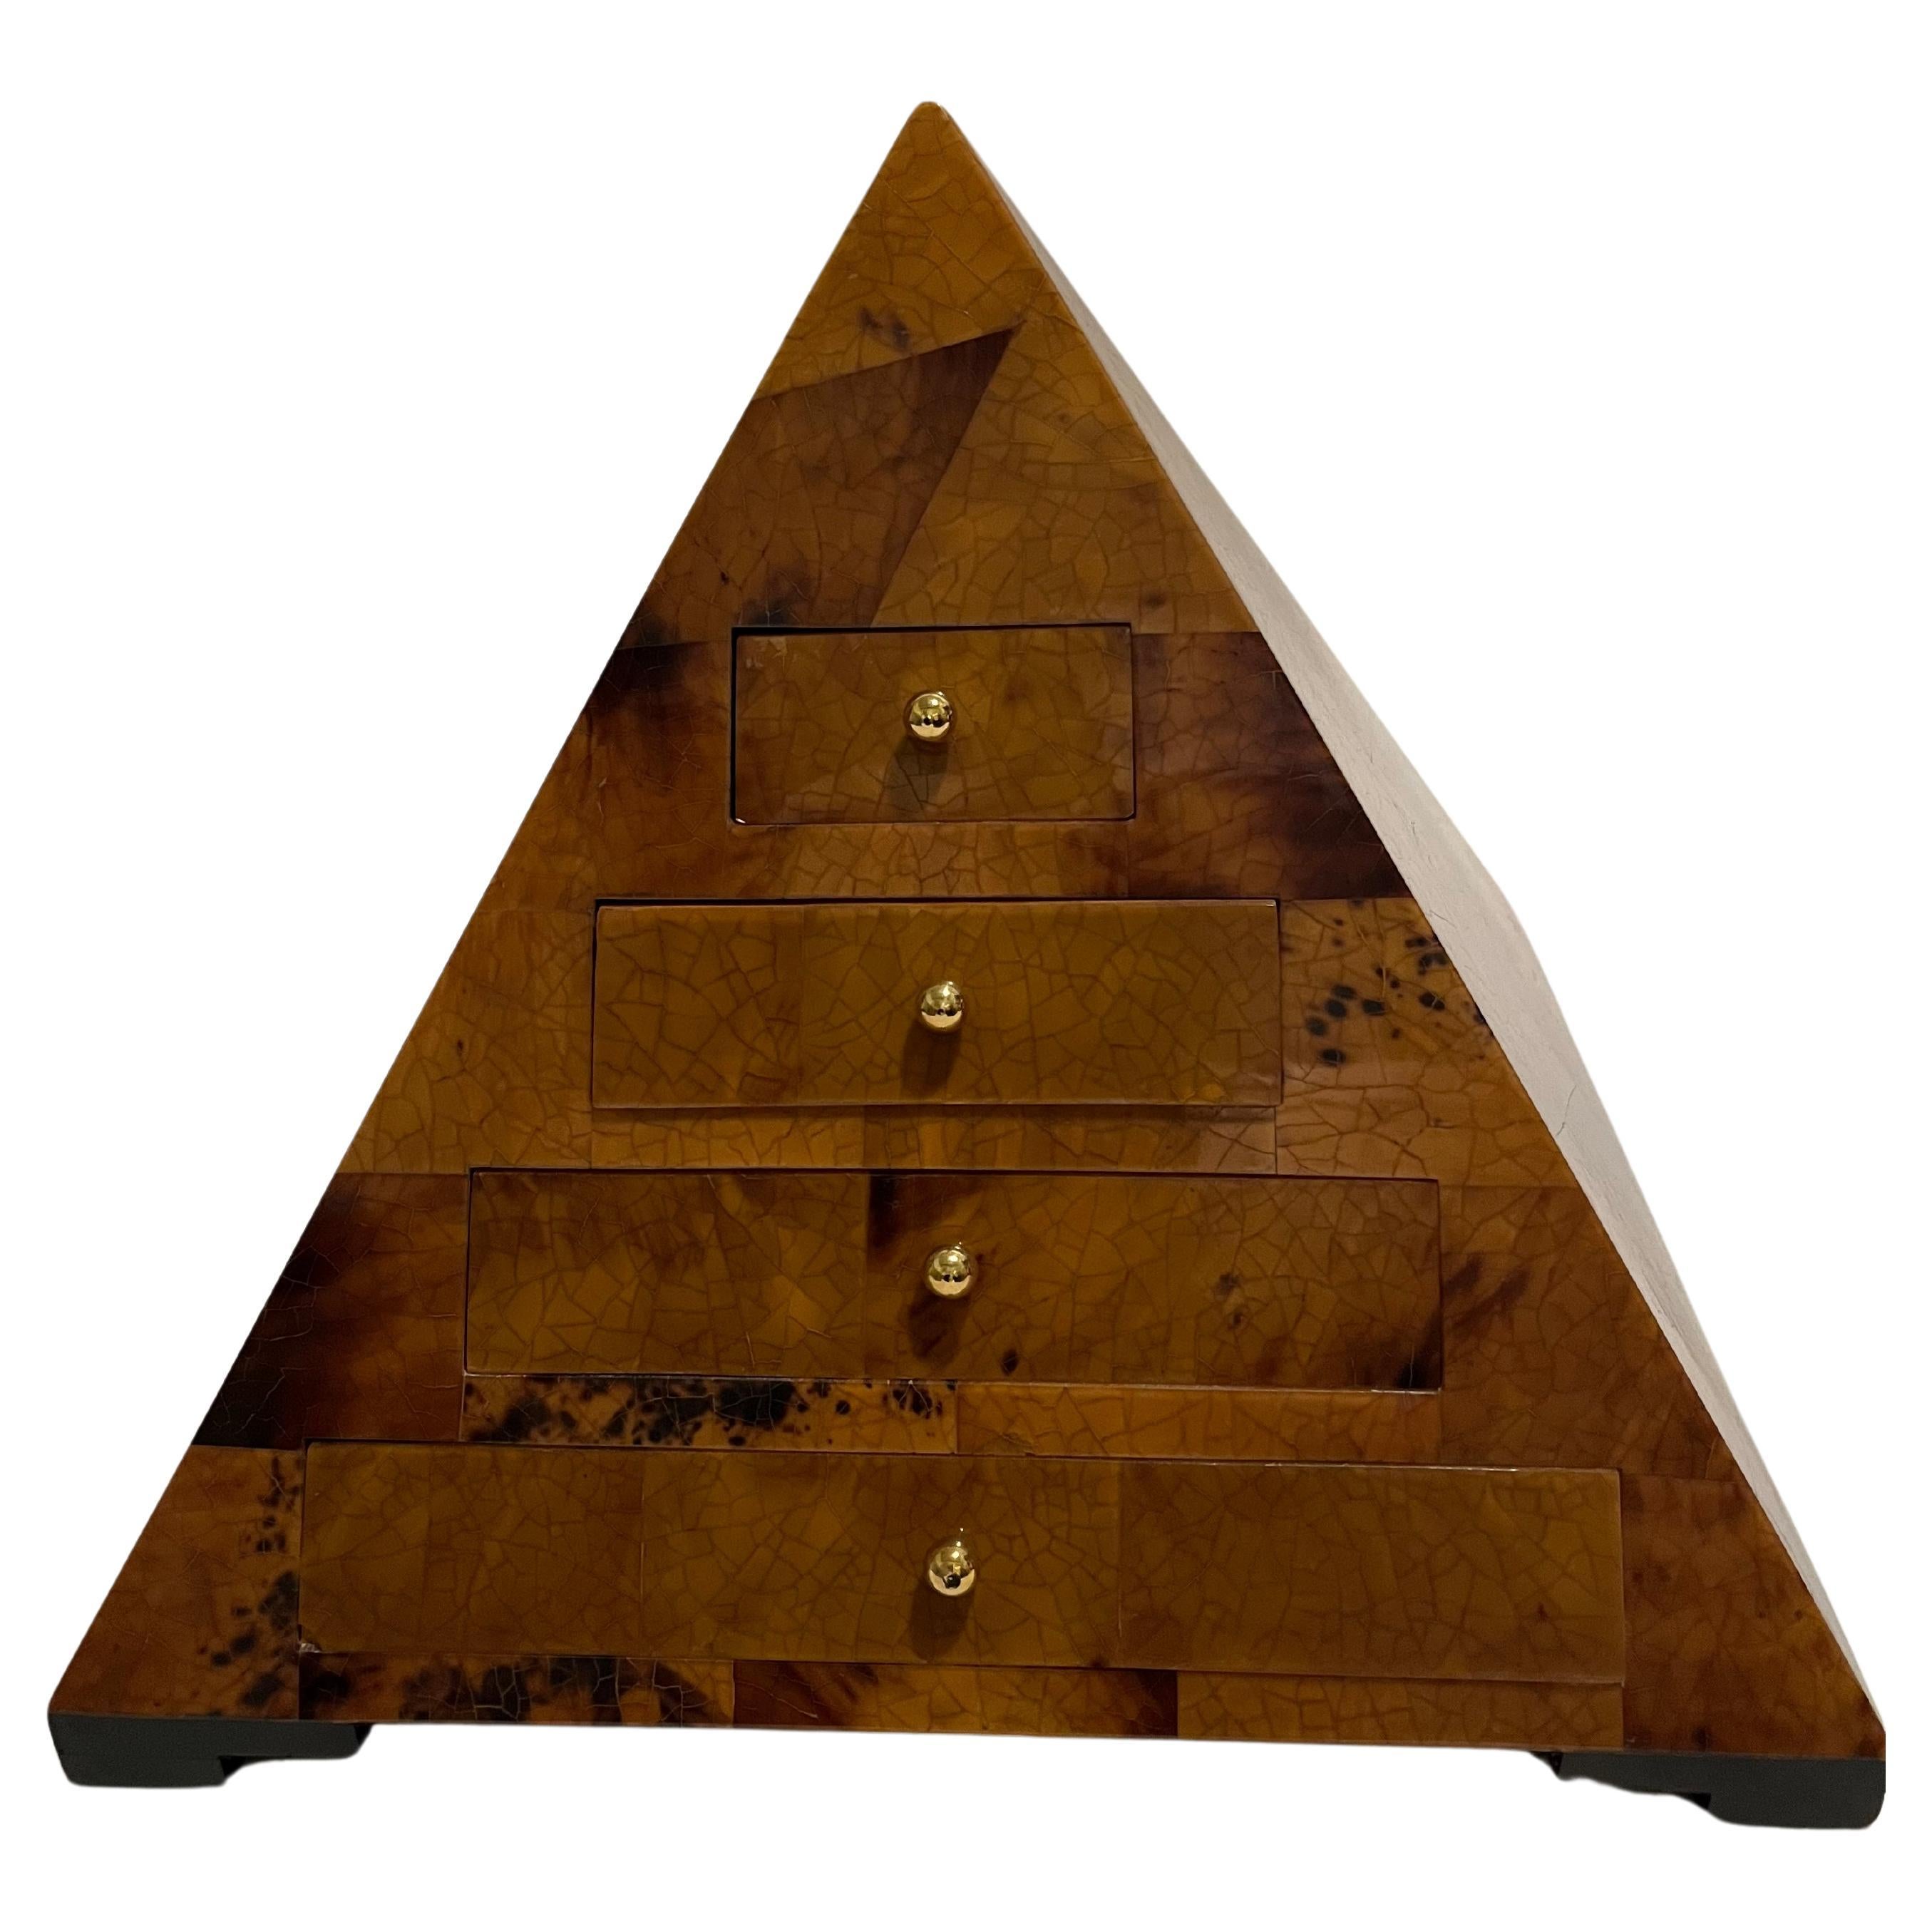 Pen shell Pyramid Box attributed to Maitland Smith